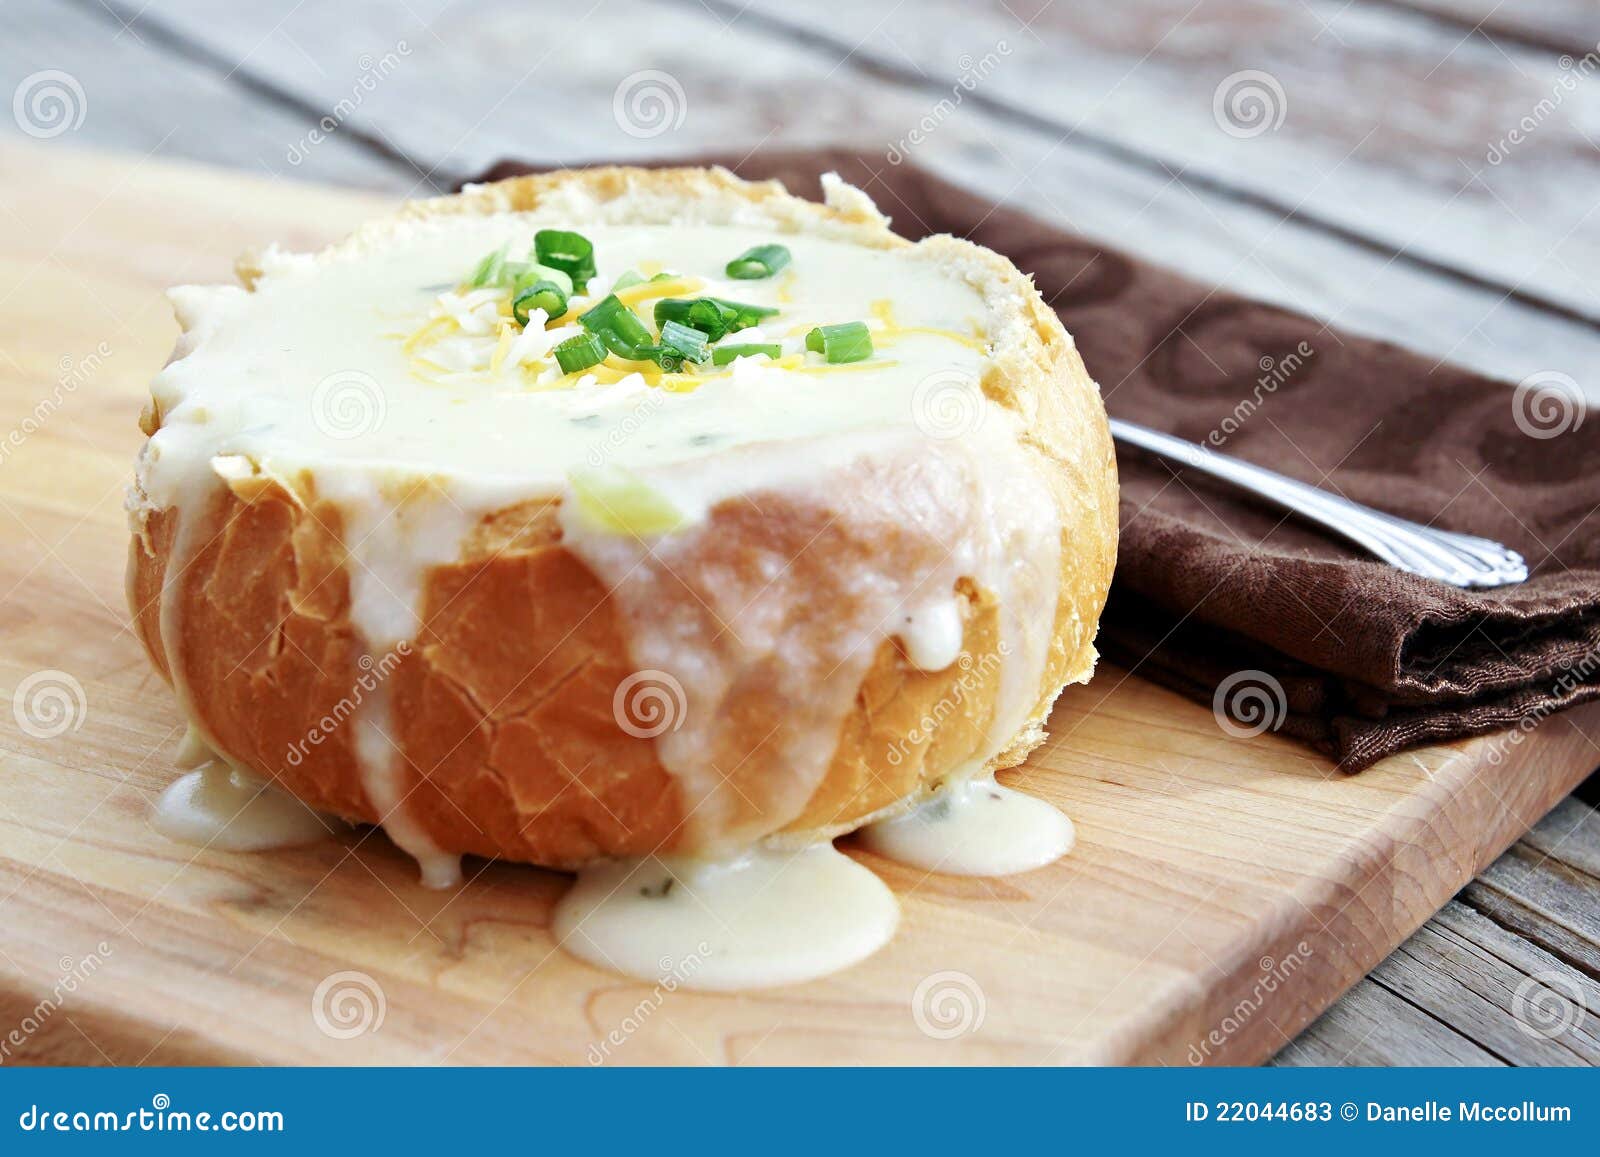 potato soup in bread bowl